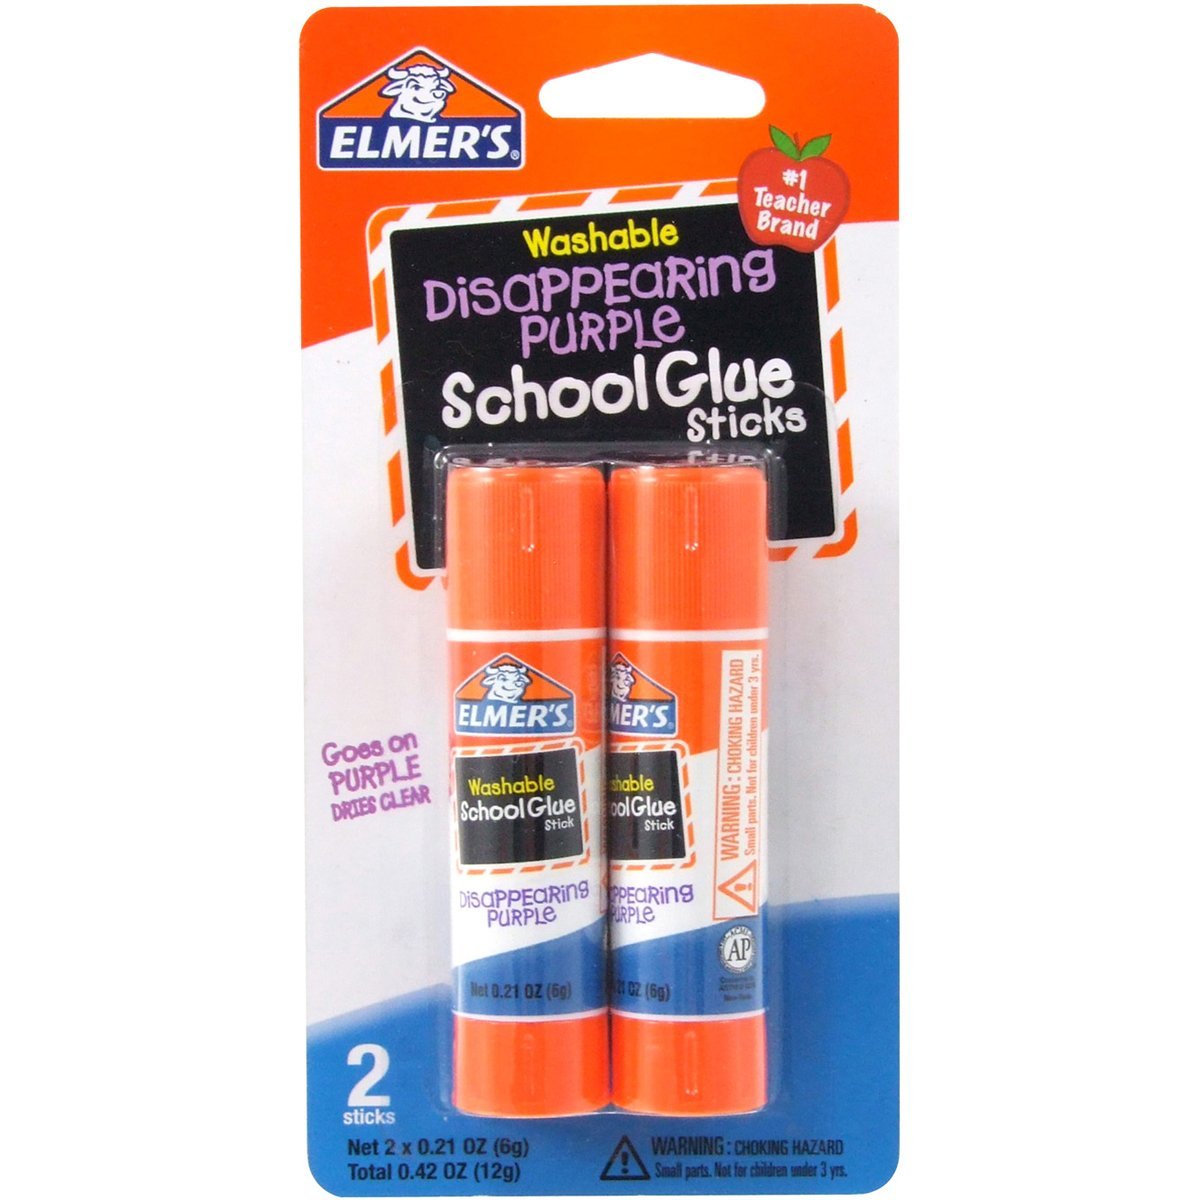 Elmer’s Disappearing Purple School Glue Sticks – Pack of 2 – Just $.70!